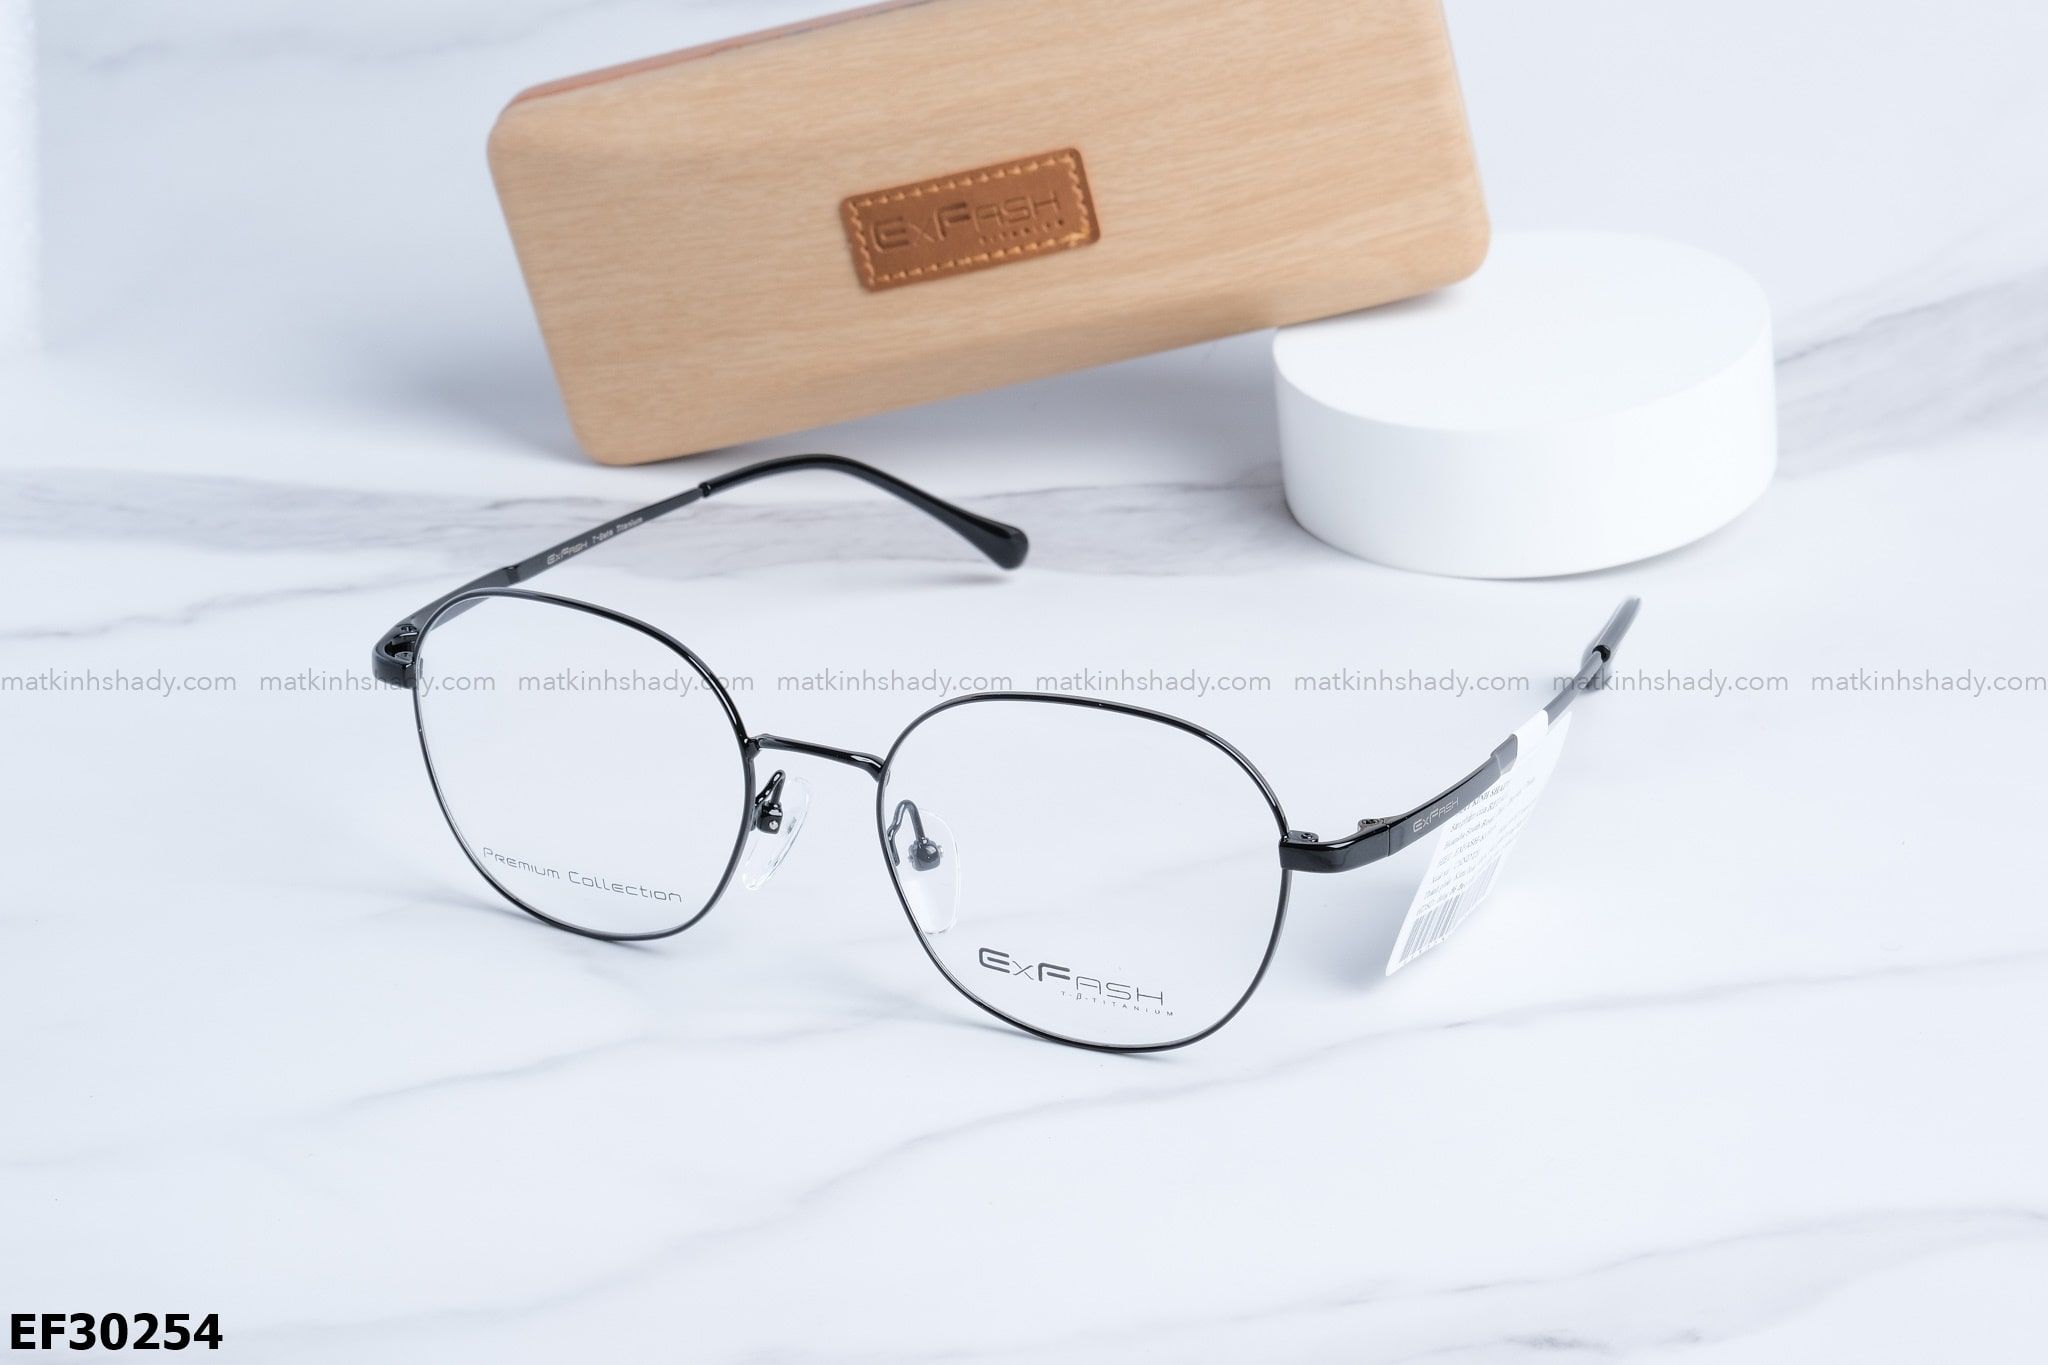  Exfash Eyewear - Glasses - EF30254 